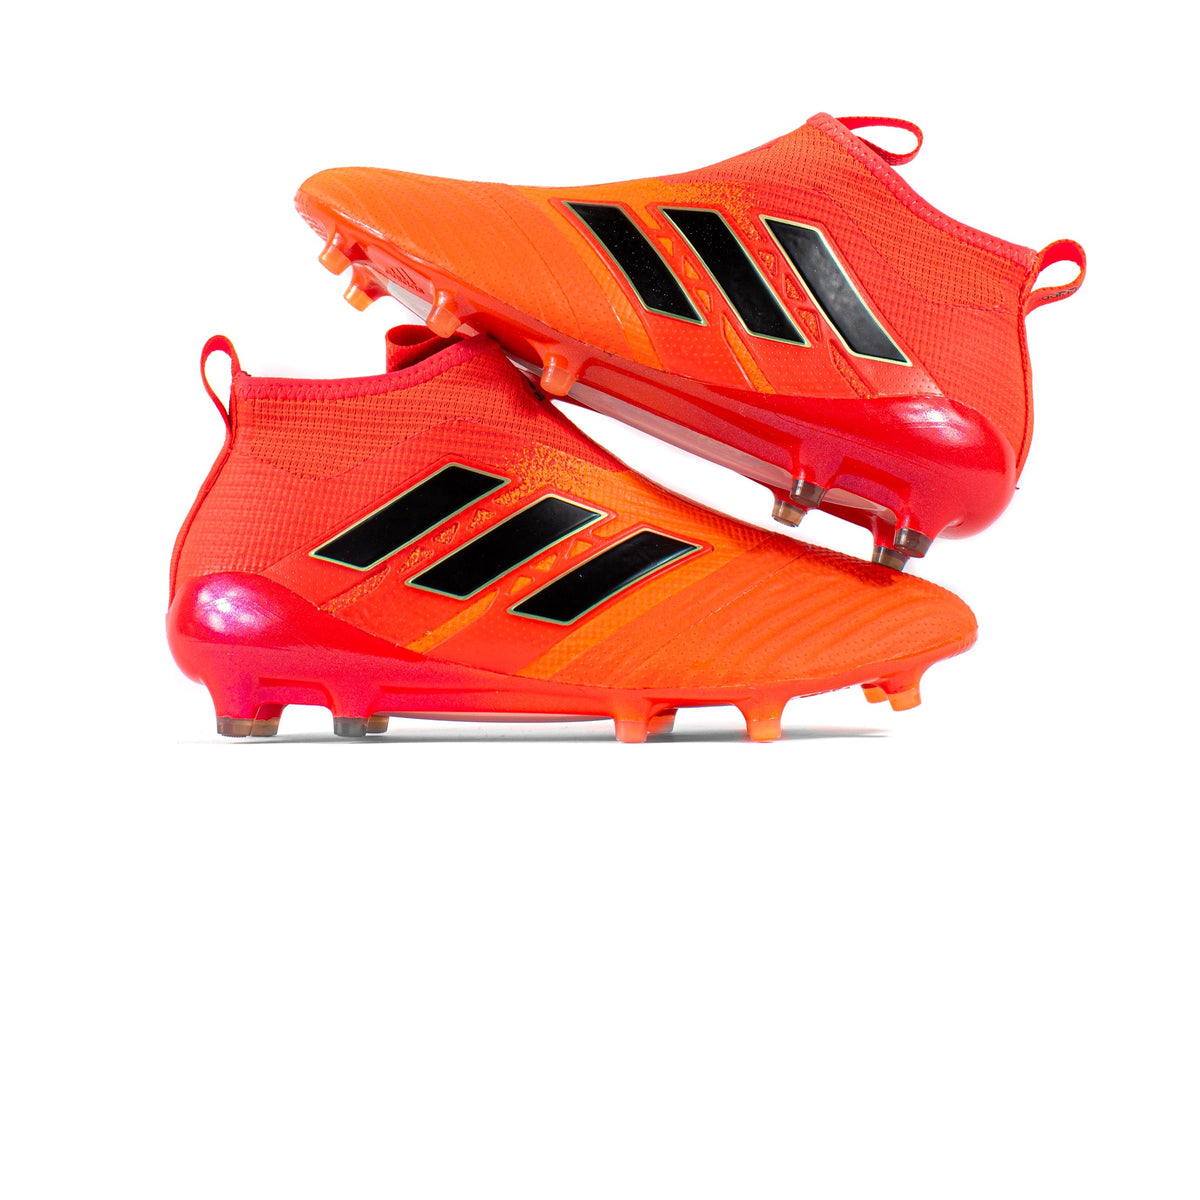 mesterværk Begå underslæb Secréte Adidas Ace 17+ PureControl Red FG – Classic Soccer Cleats